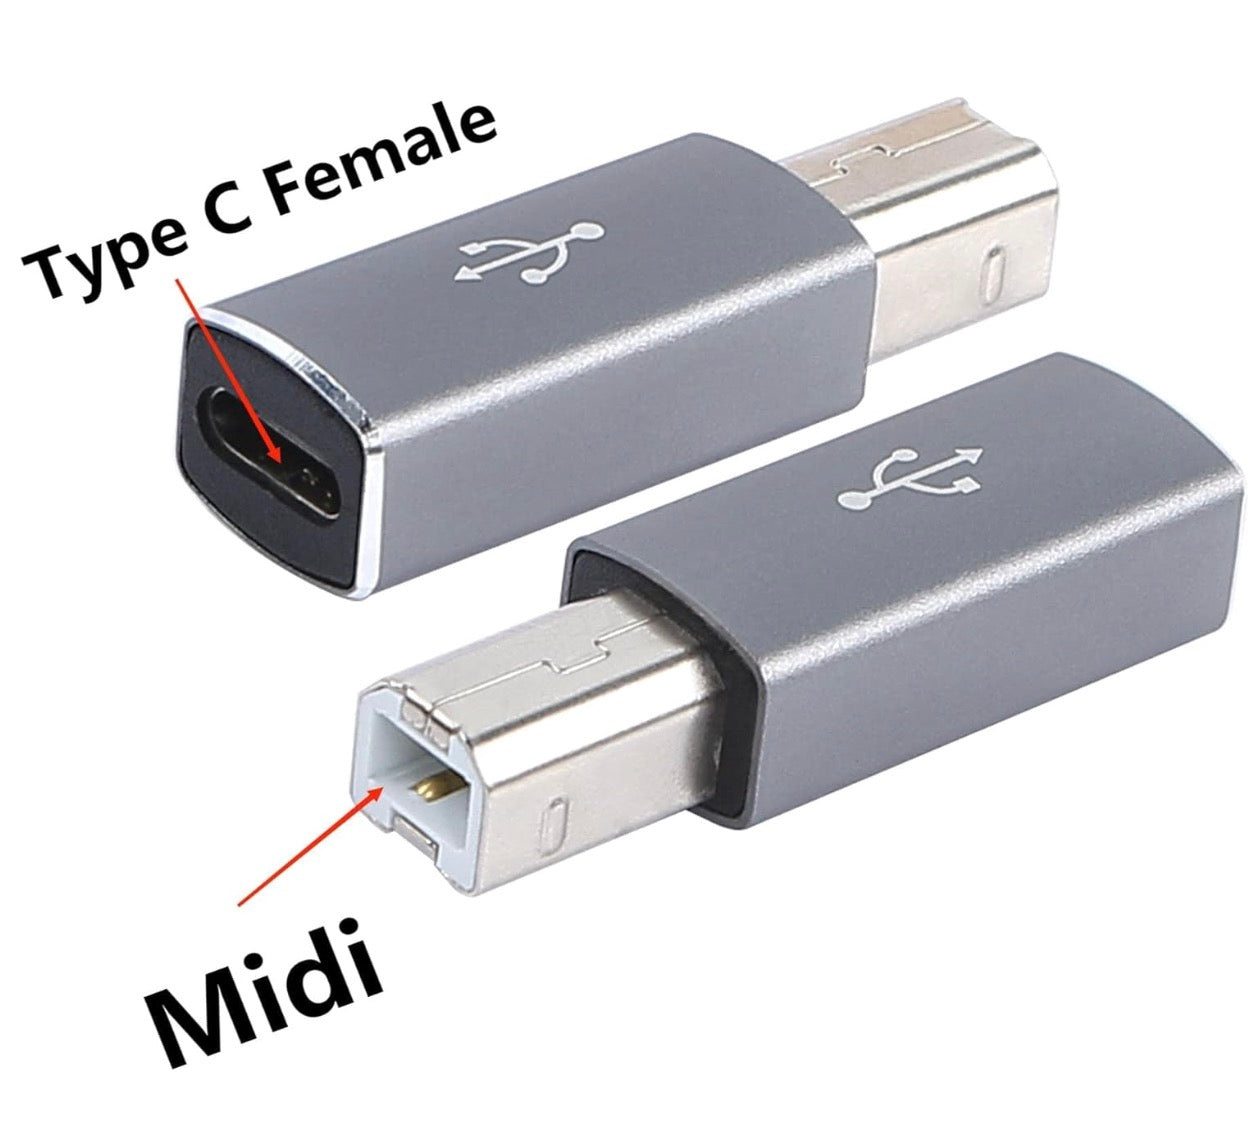 USB C to USB 2.0 B MIDI Adapter Printer Connector for Printers,Midi Keyboard,Electronic Music Instrument